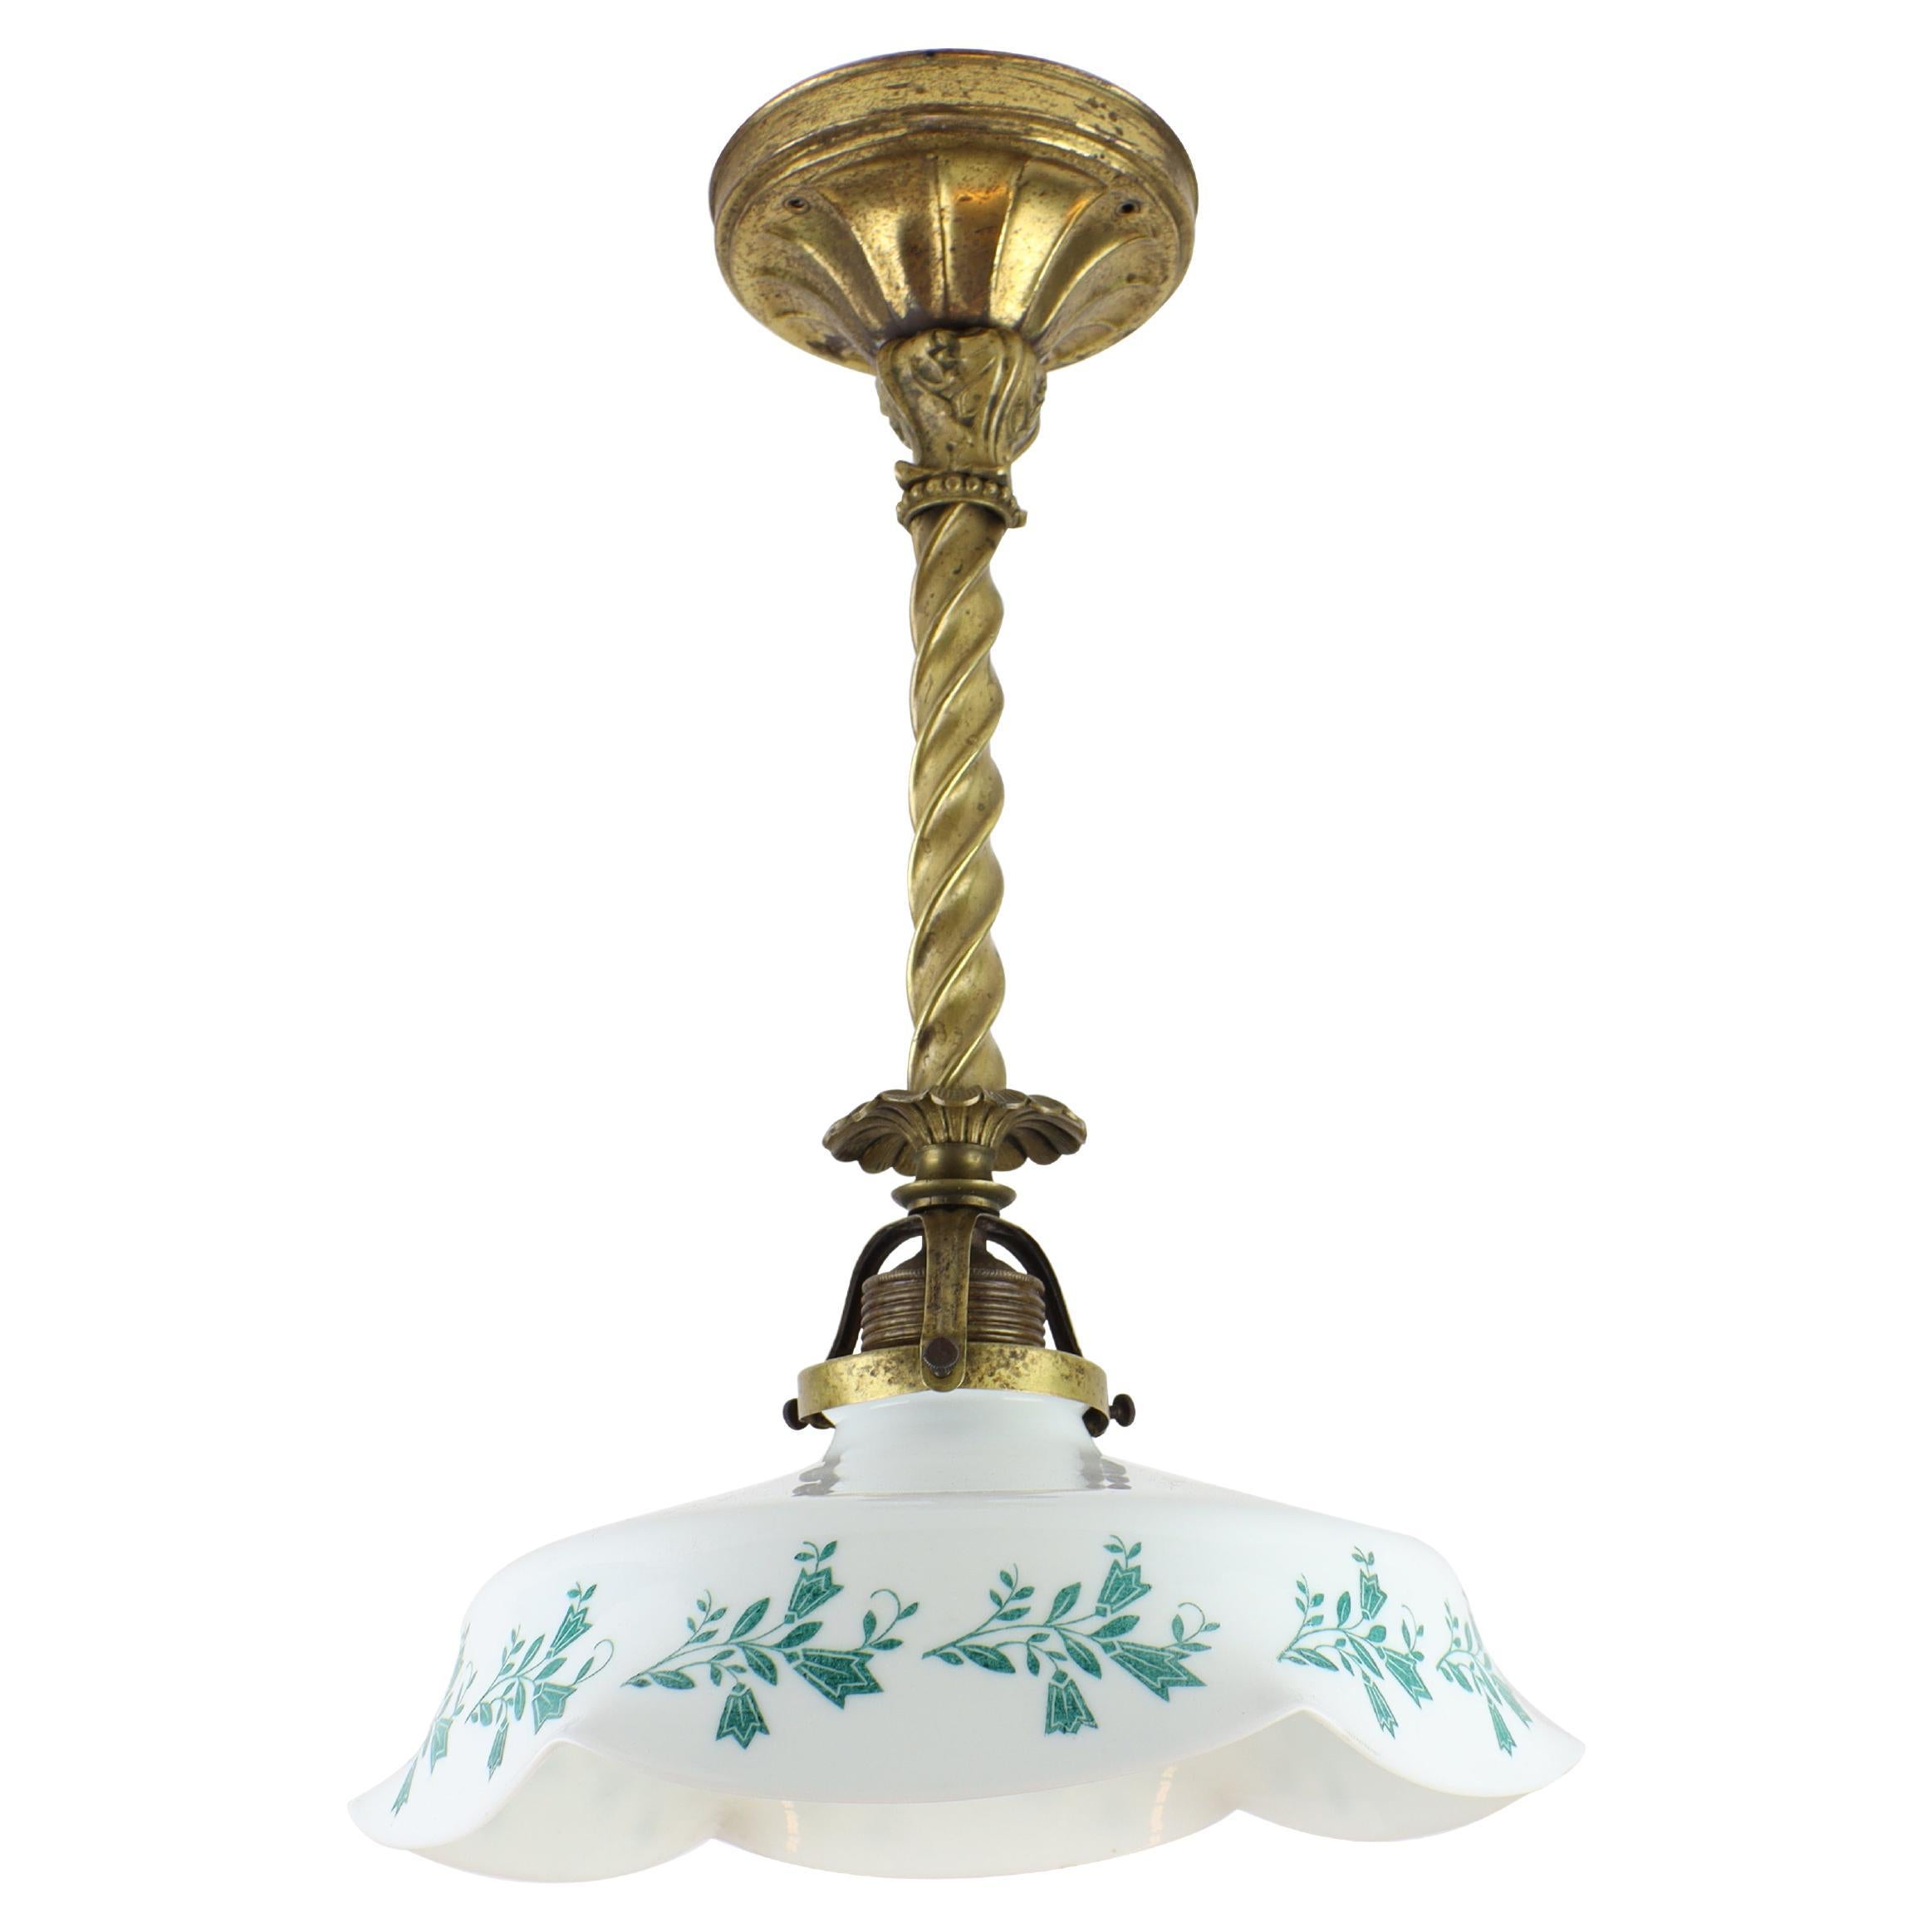 Art Nouveau Ceiling Lamp with Decorative Holder For Sale